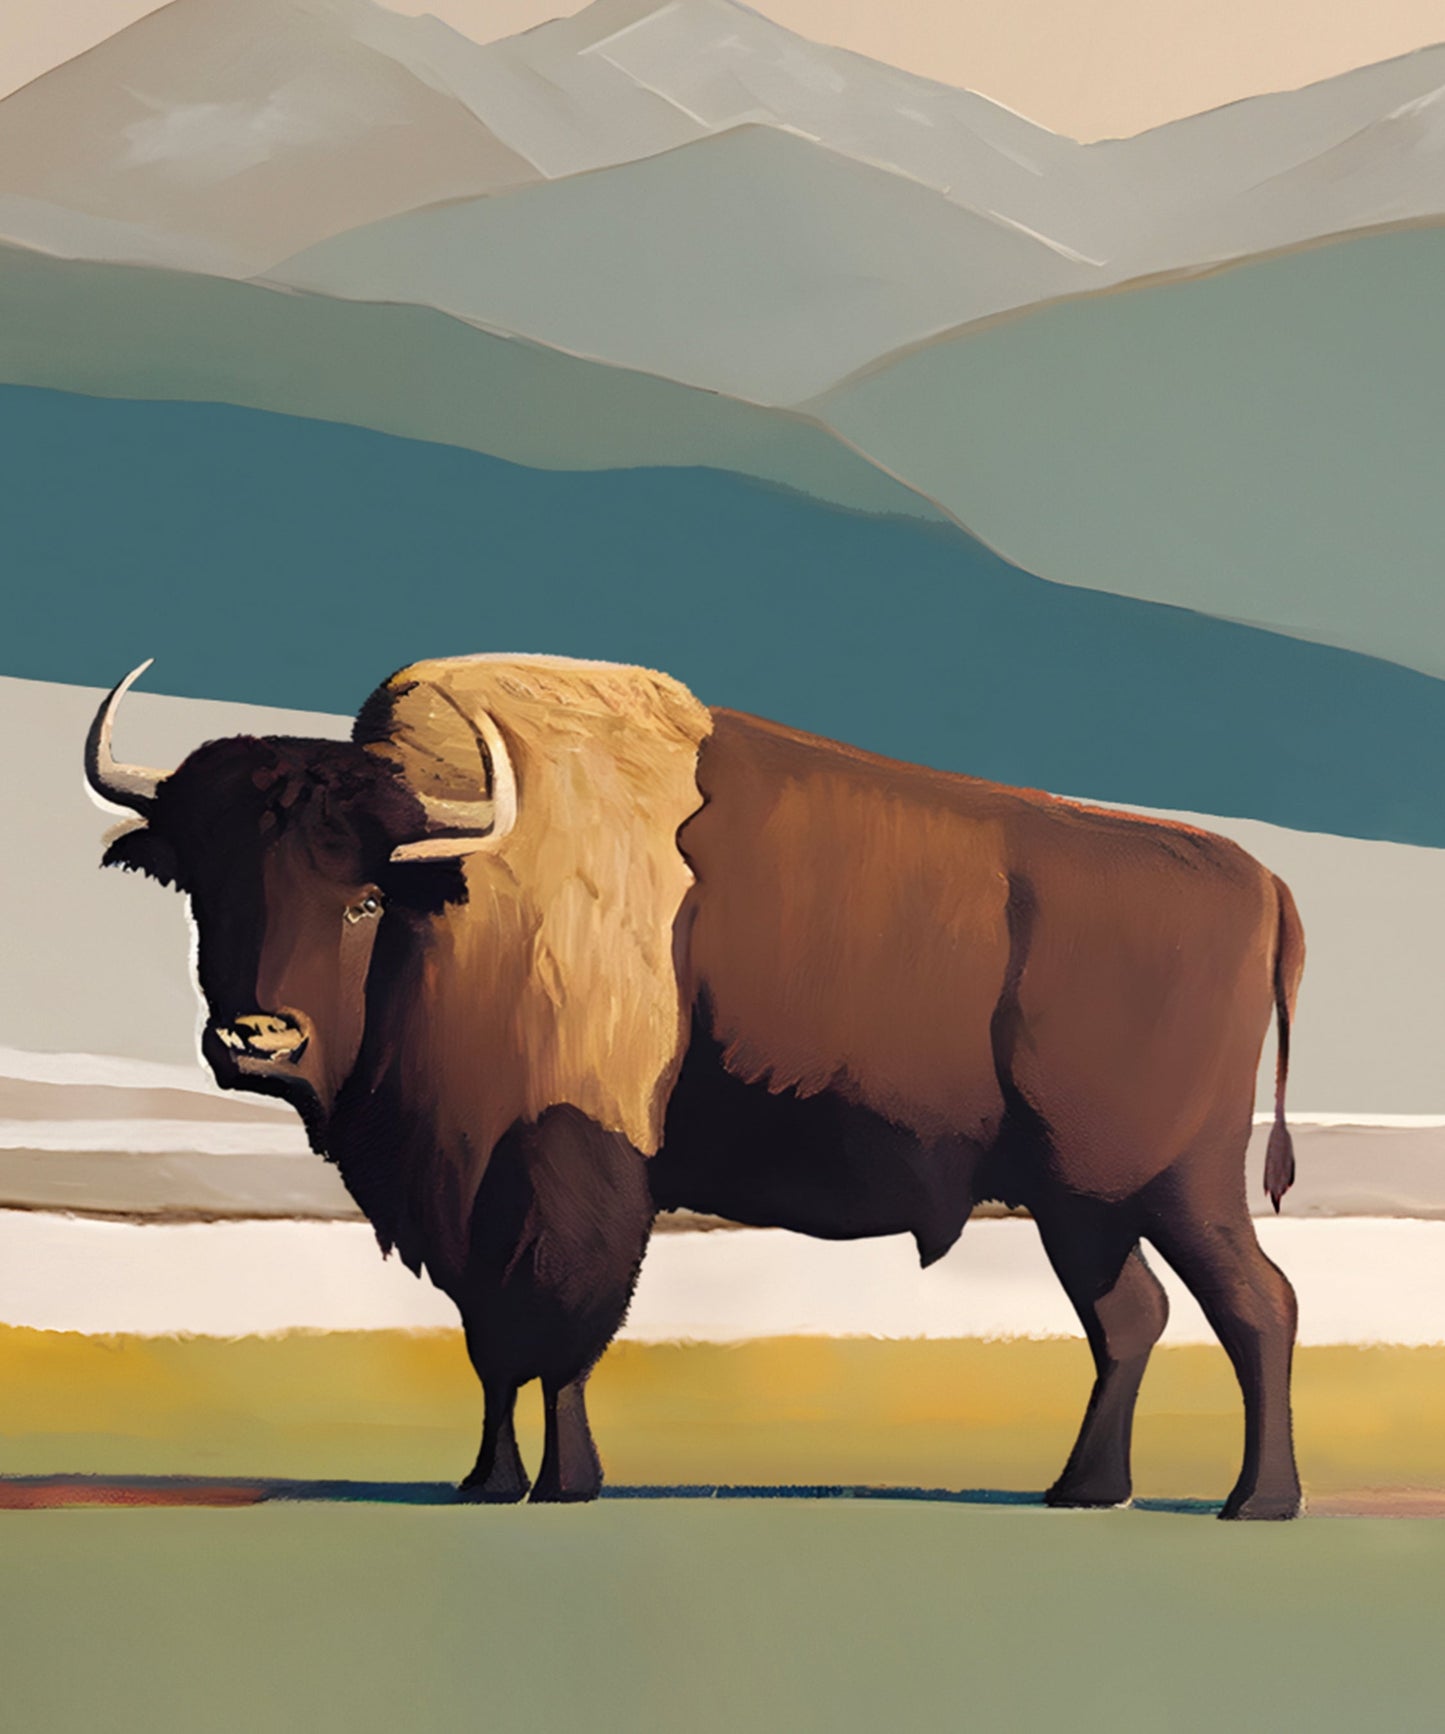 Home On the Range #2 - The Buffalo